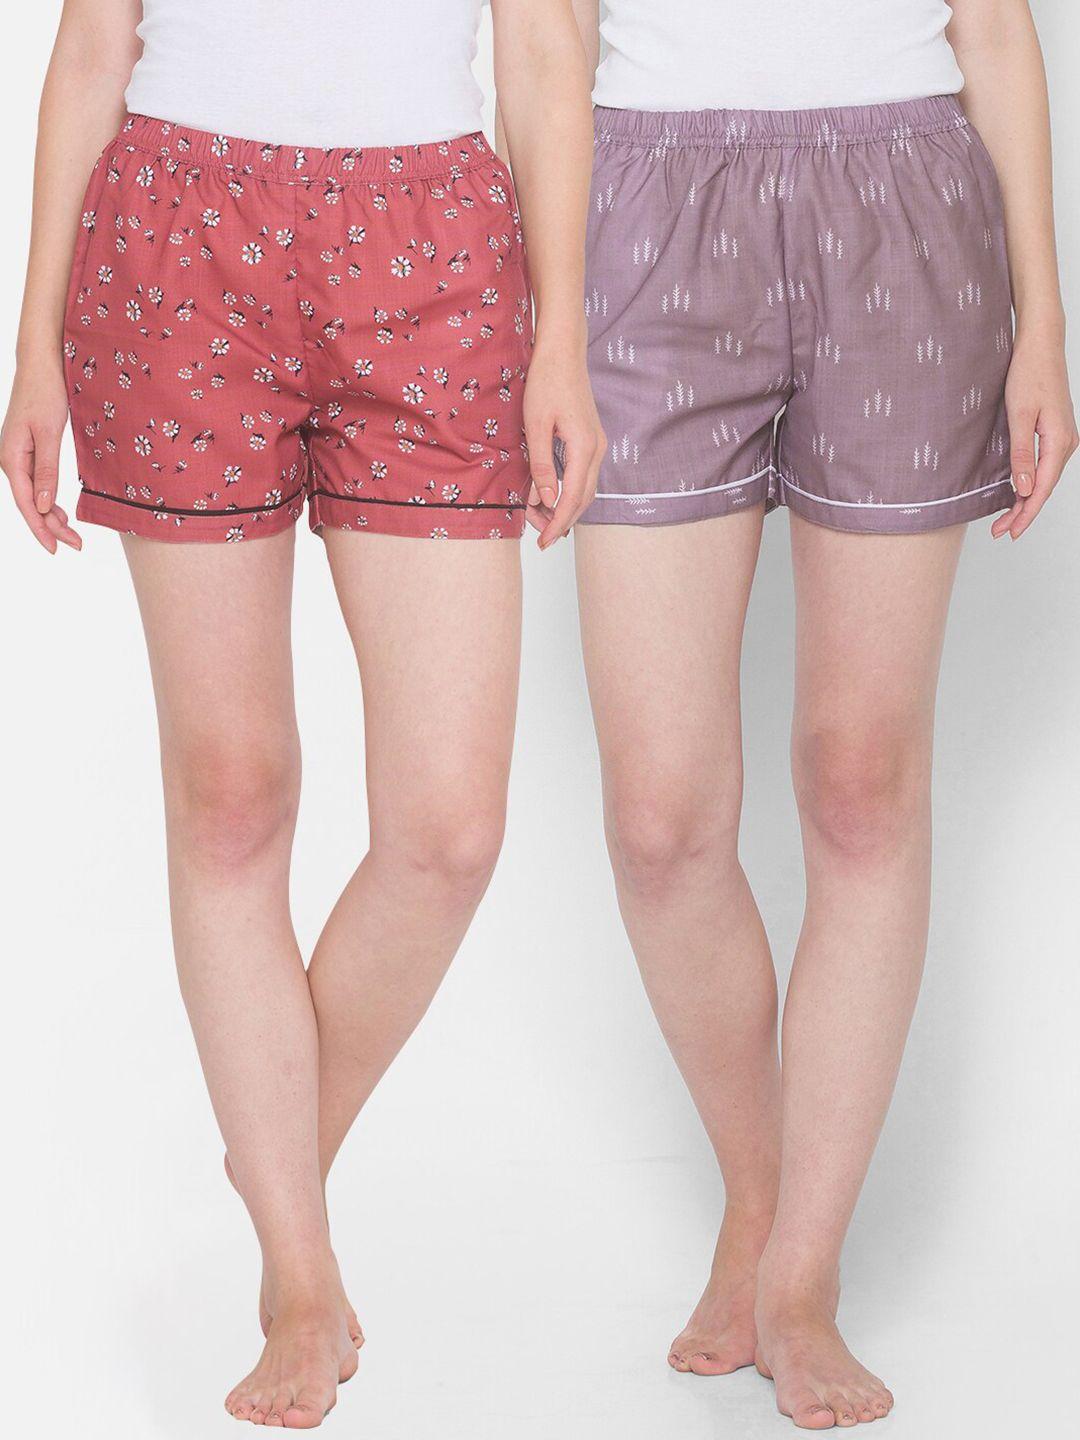 fashionrack-women-pack-of-2-brown-&-grey-printed-lounge-shorts